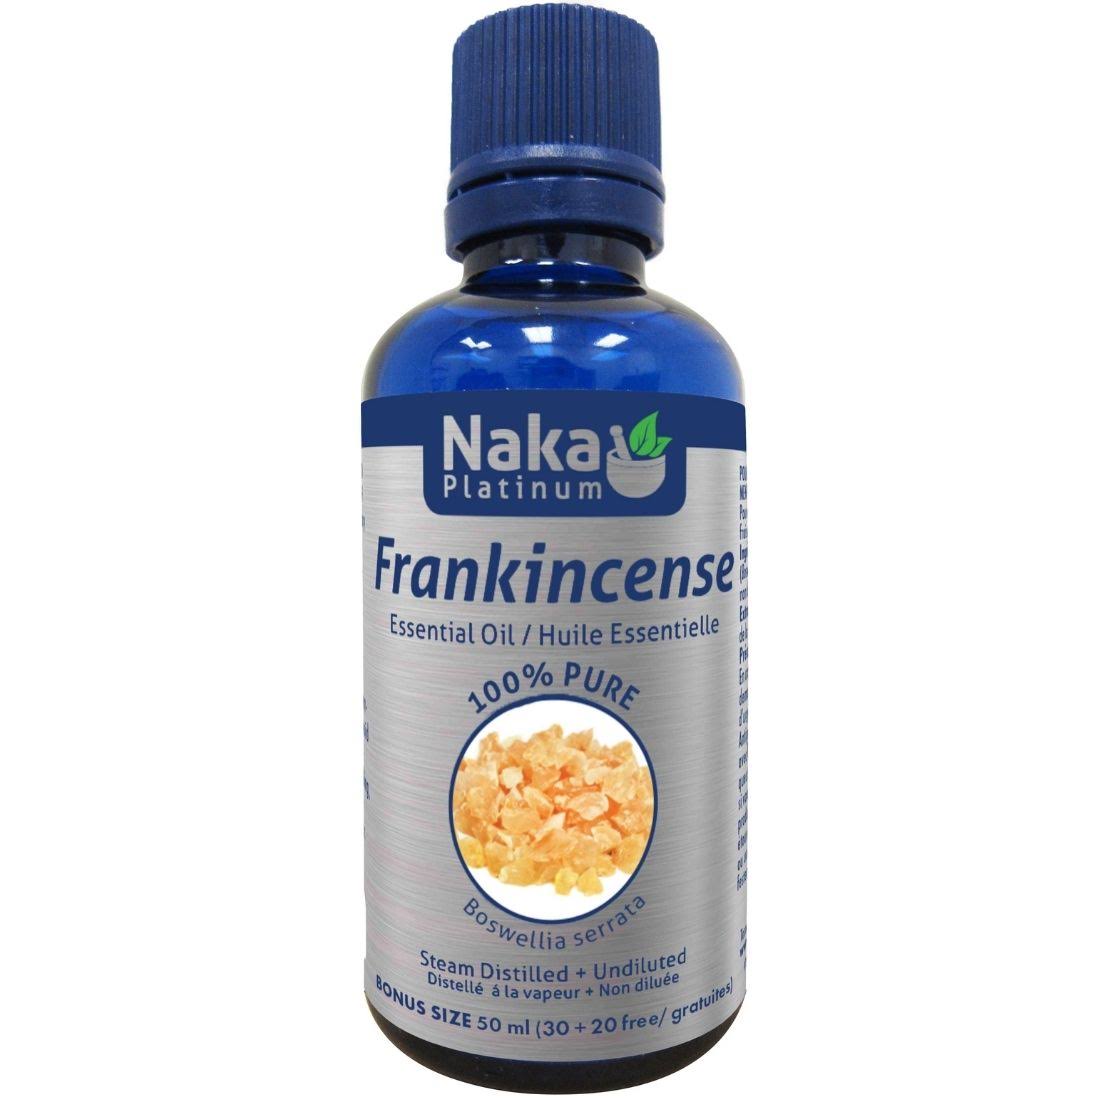 Naka Platinum Frankincense Essential Oil, 50ml